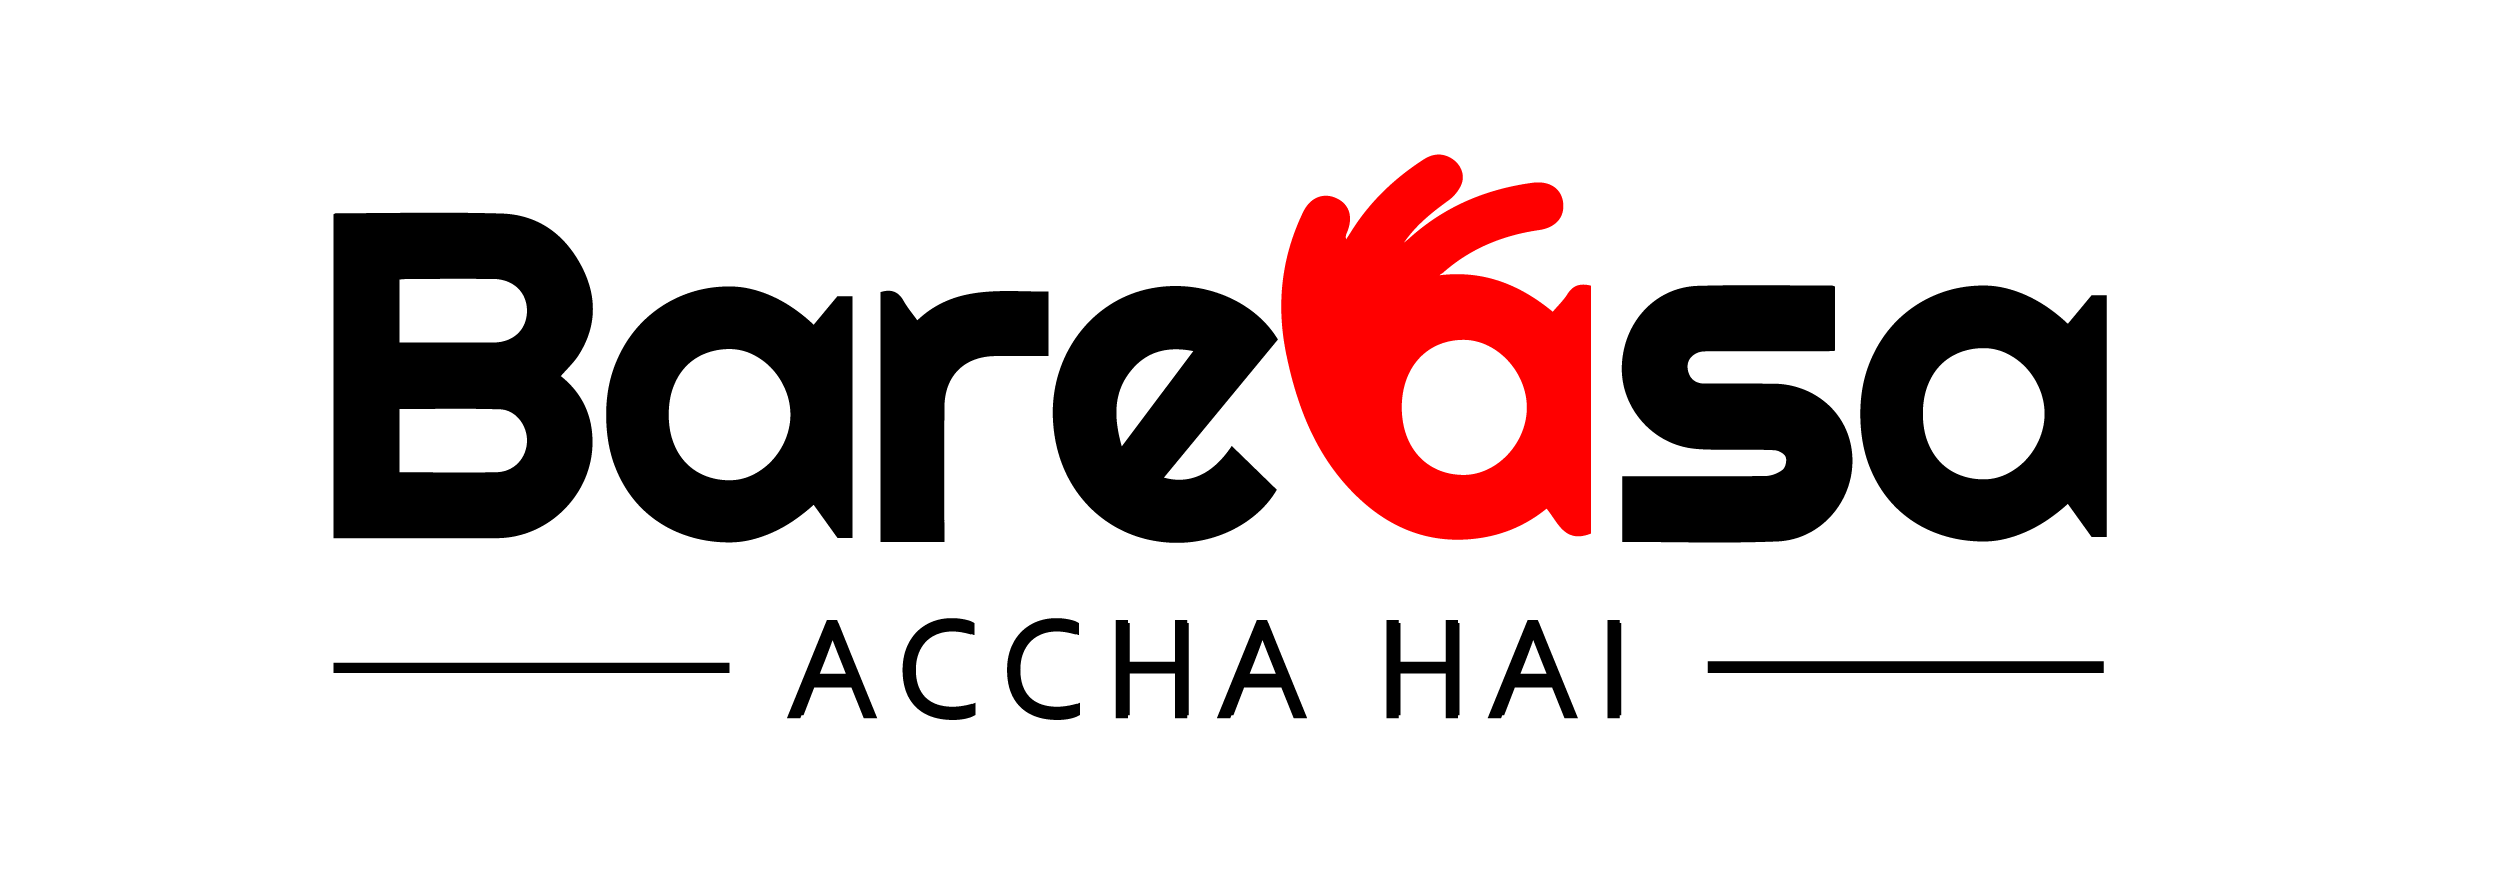 the word represent bareasa logo